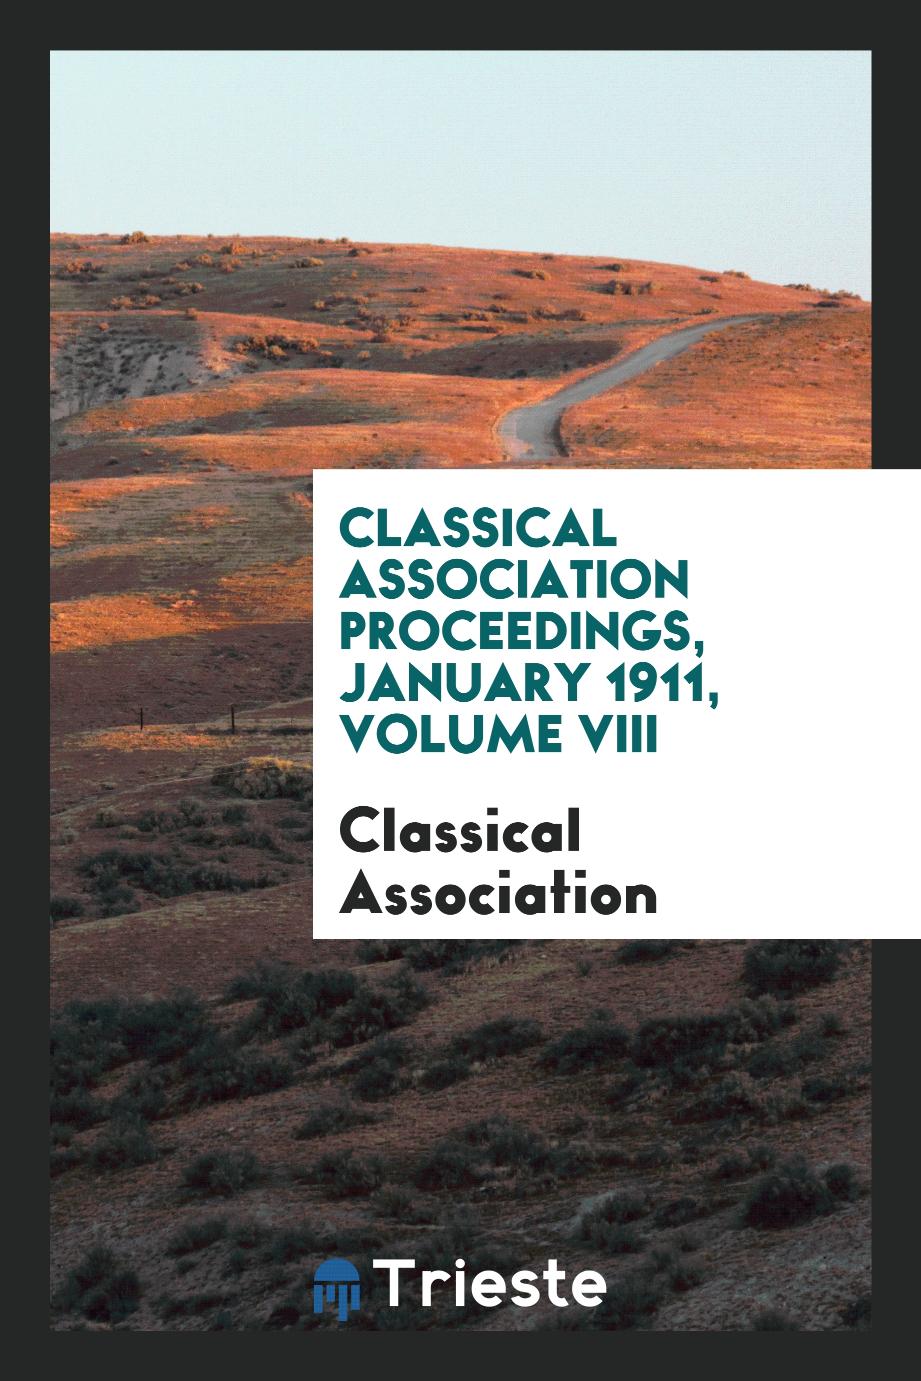 Classical association proceedings, january 1911, volume VIII